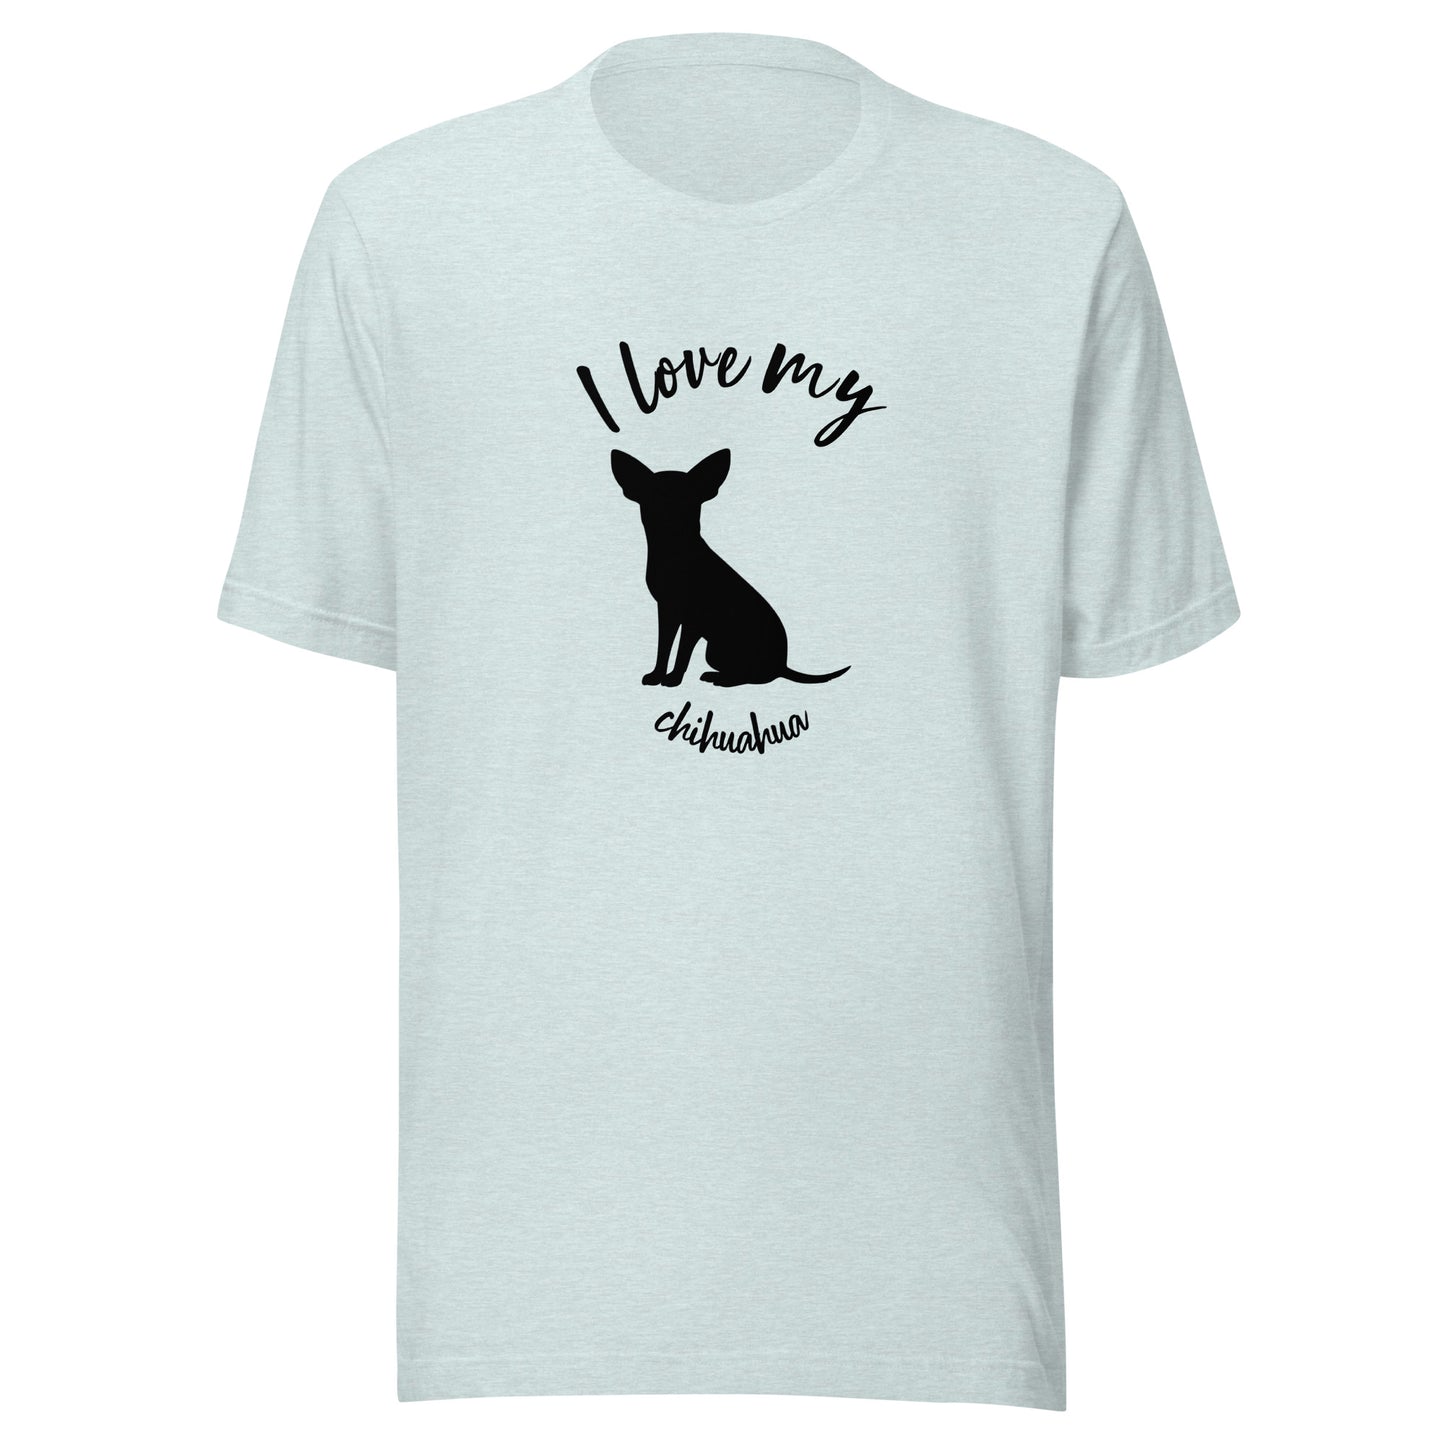 I Love my Chihuahua - Unisex t-shirt